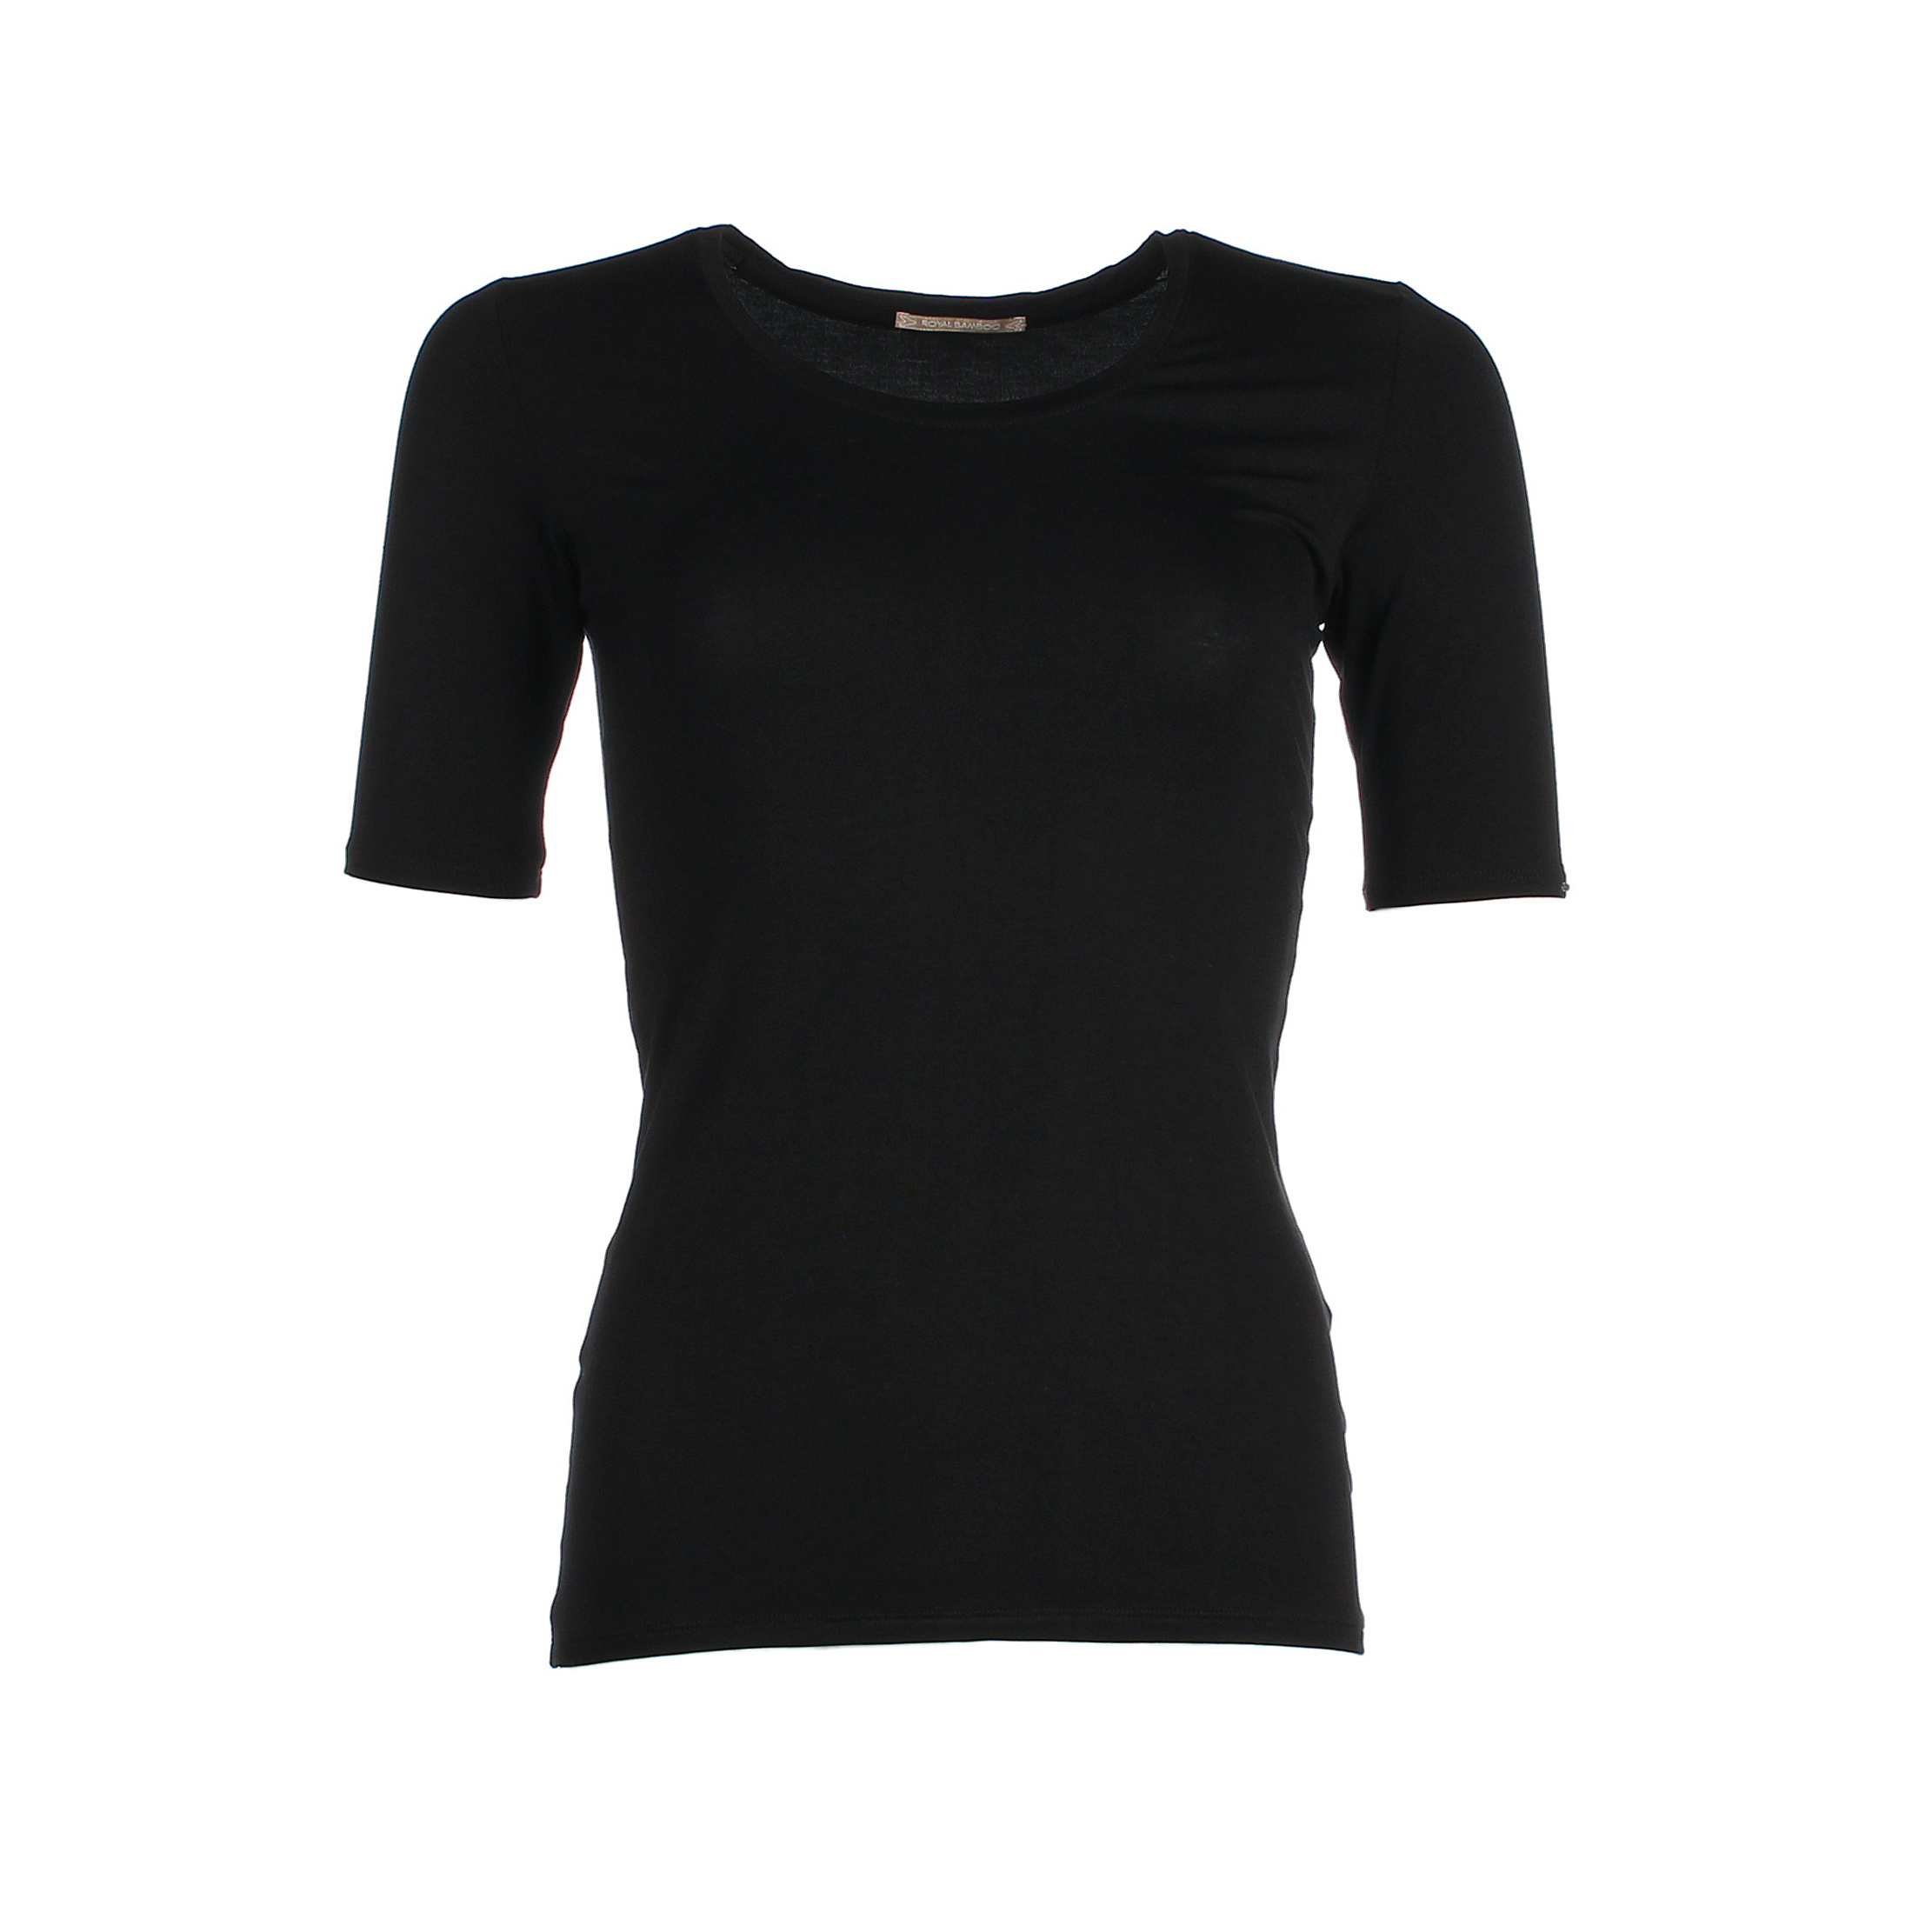 Short Sleeve bamboo shirt - Black - Korte mouwen bamboe t-shirt - Zwart